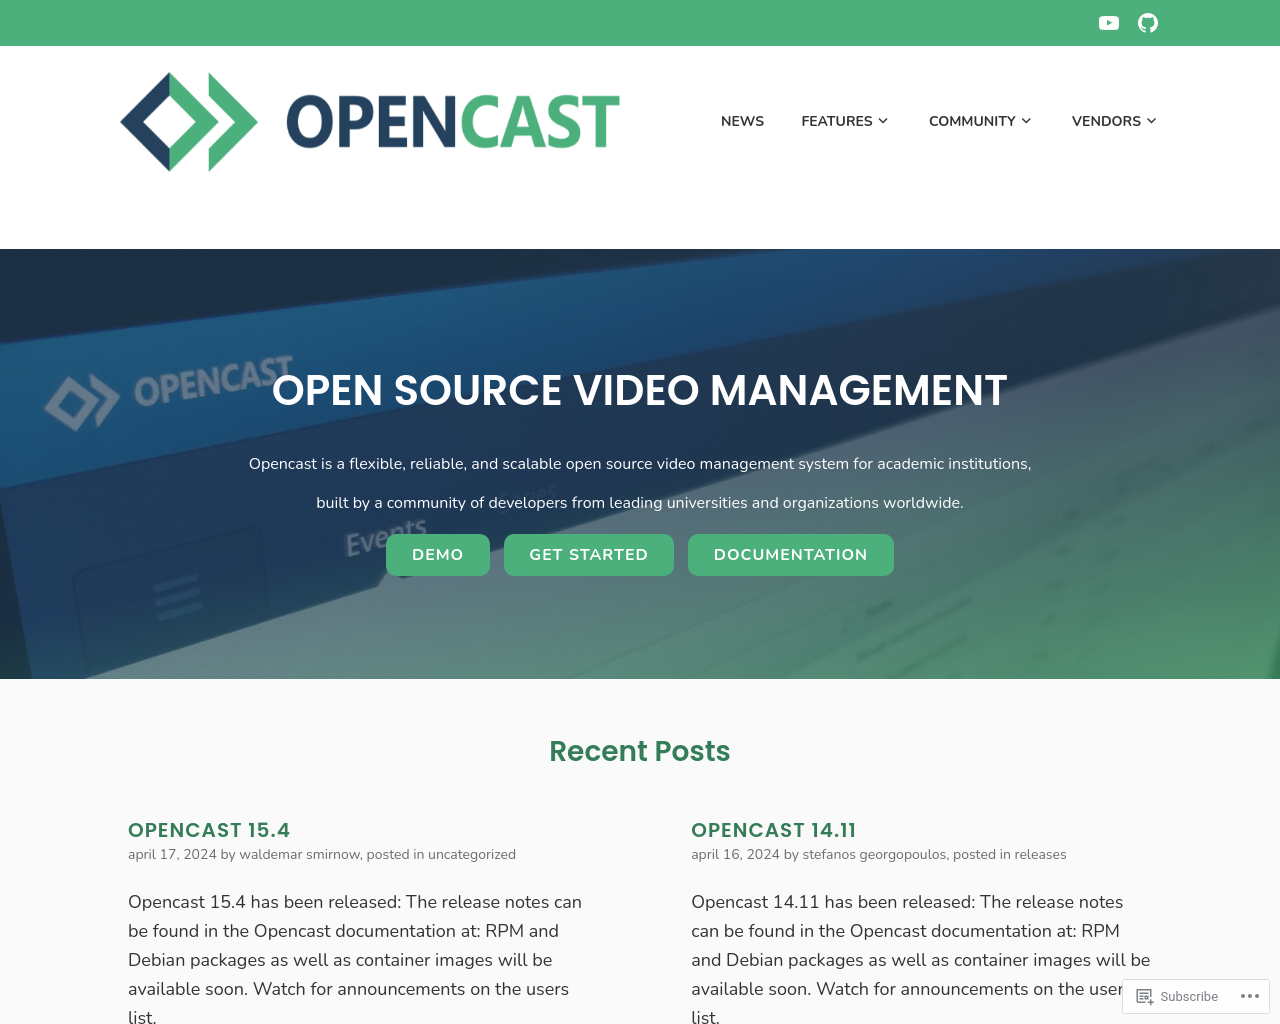 opencast.org